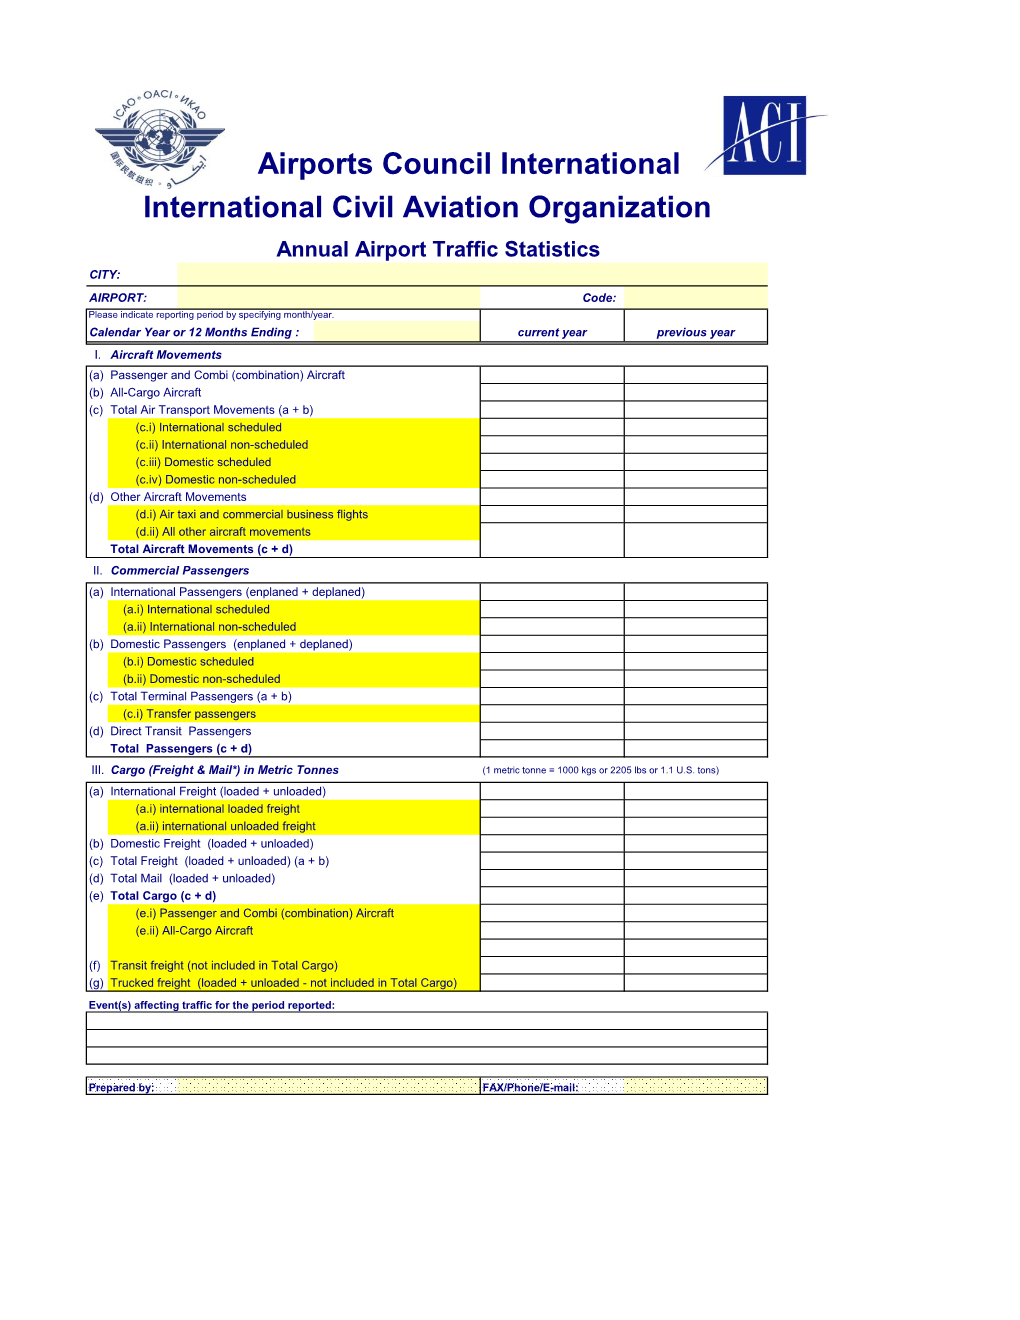 International Civil Aviation Organization Airports Council International